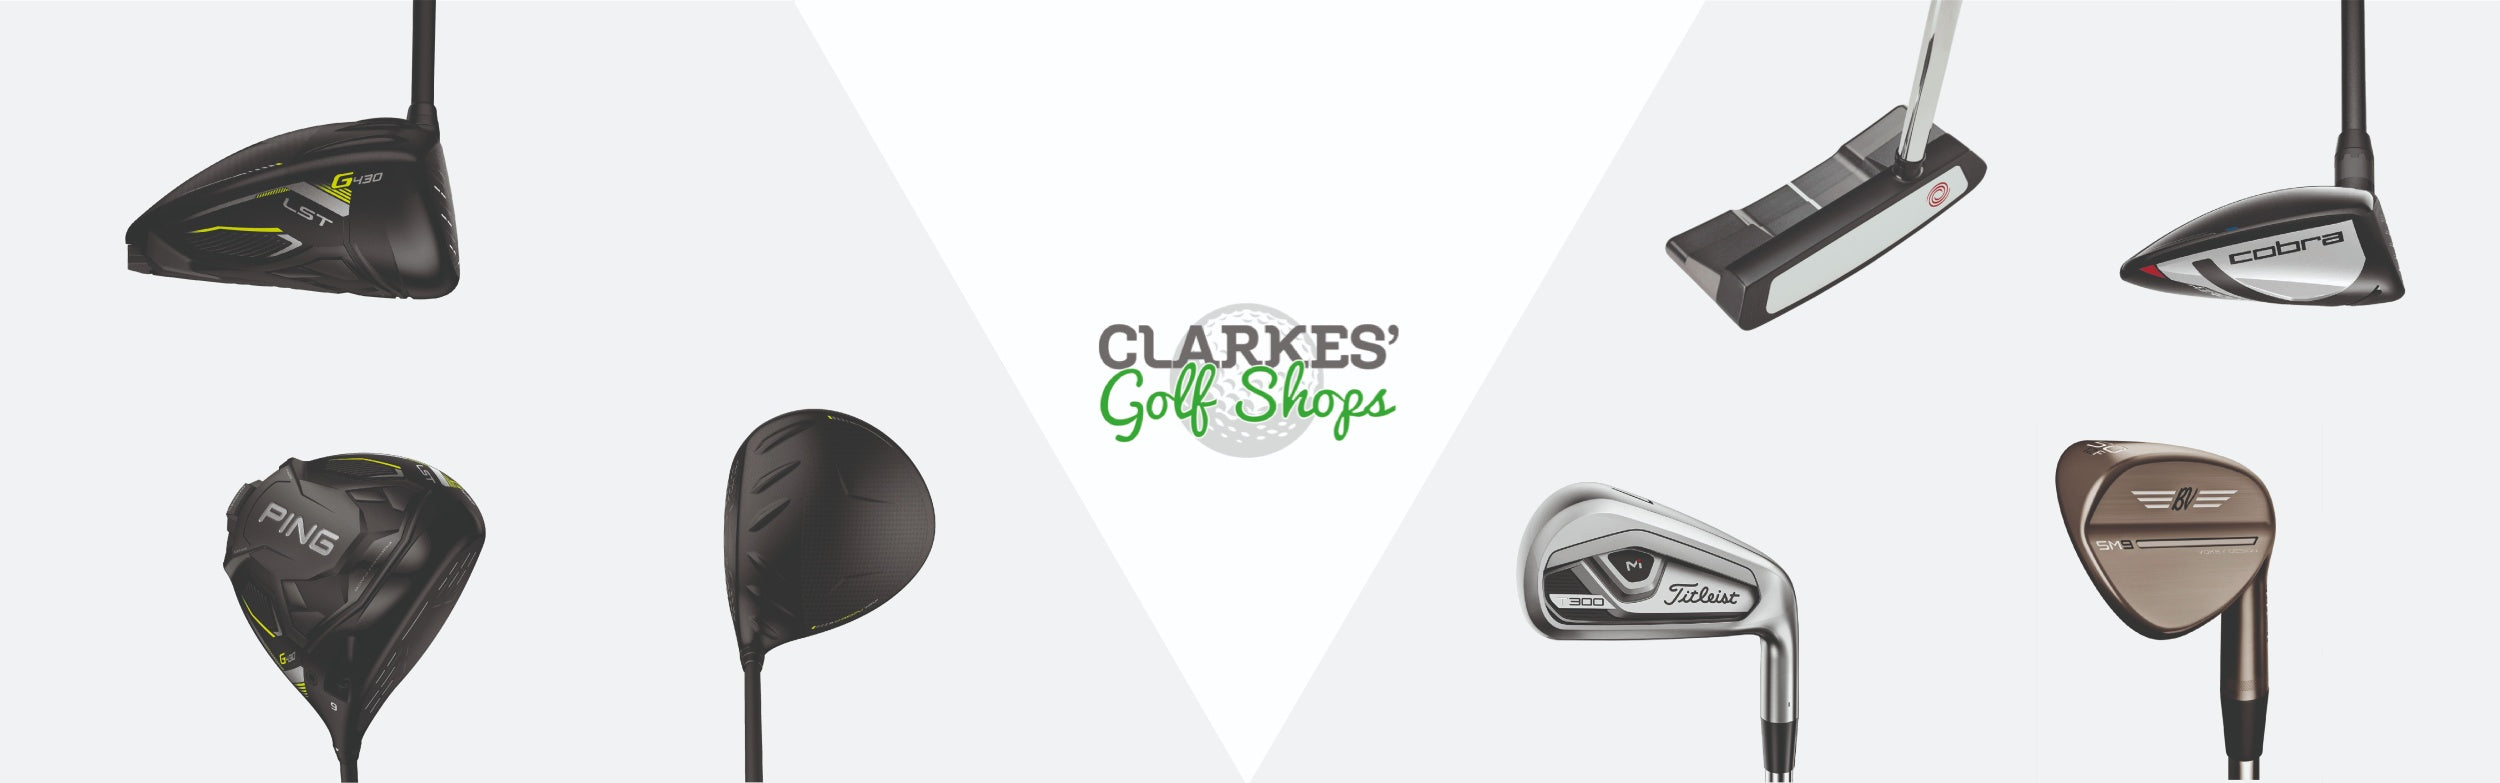 The Best Golf Clubs For Beginners - Clarkes Golf